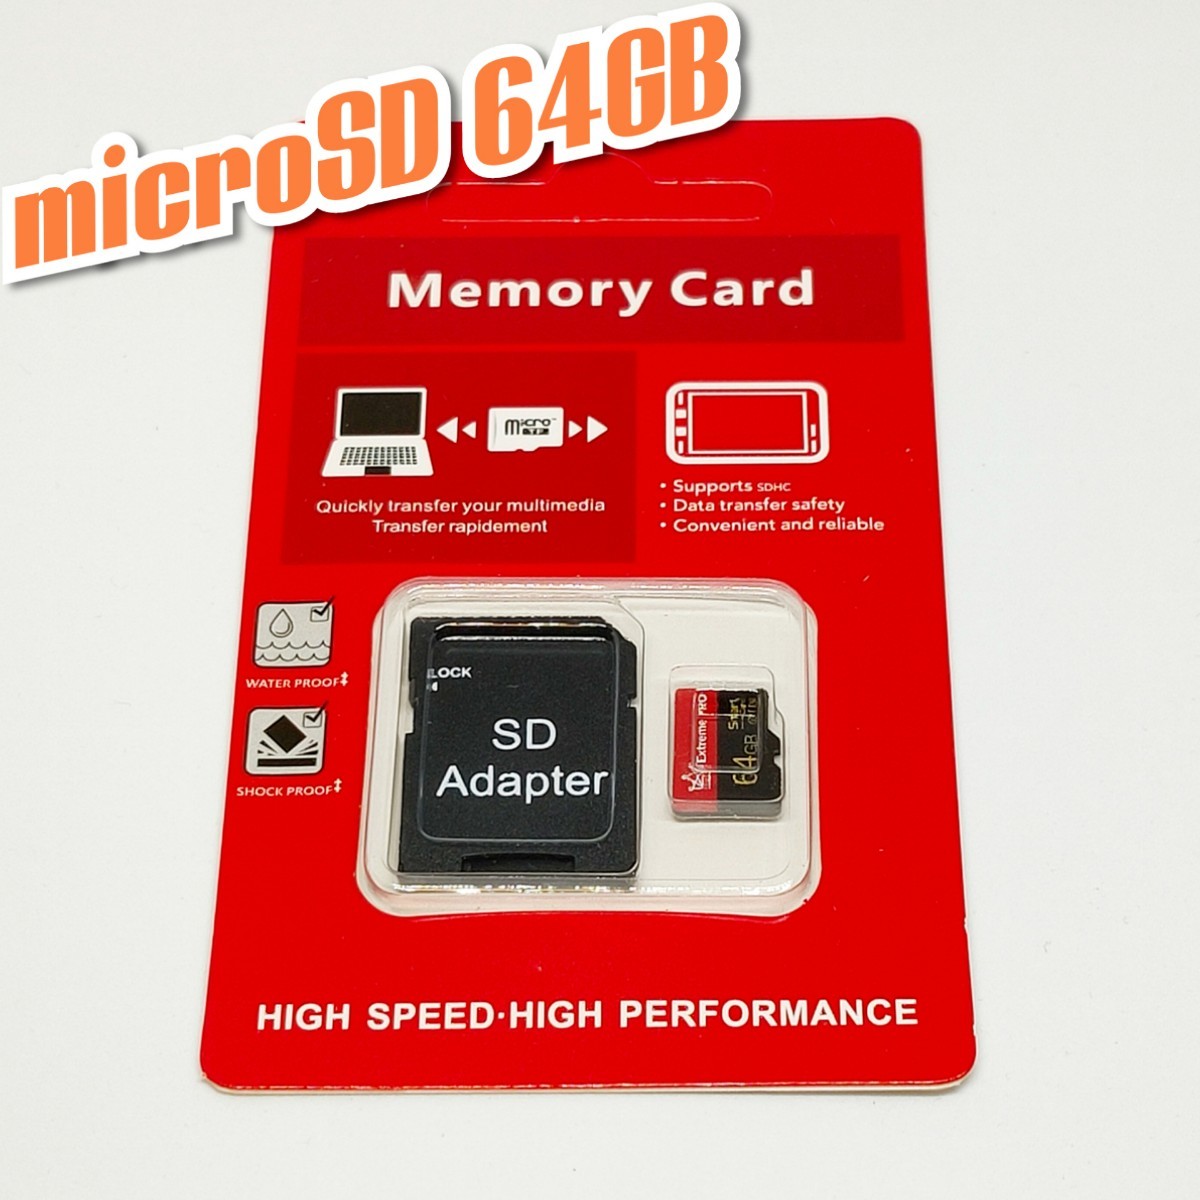 マイクロSDカード 64GB 1枚 class10 UHS-I対応 microSD EXTREME PRO